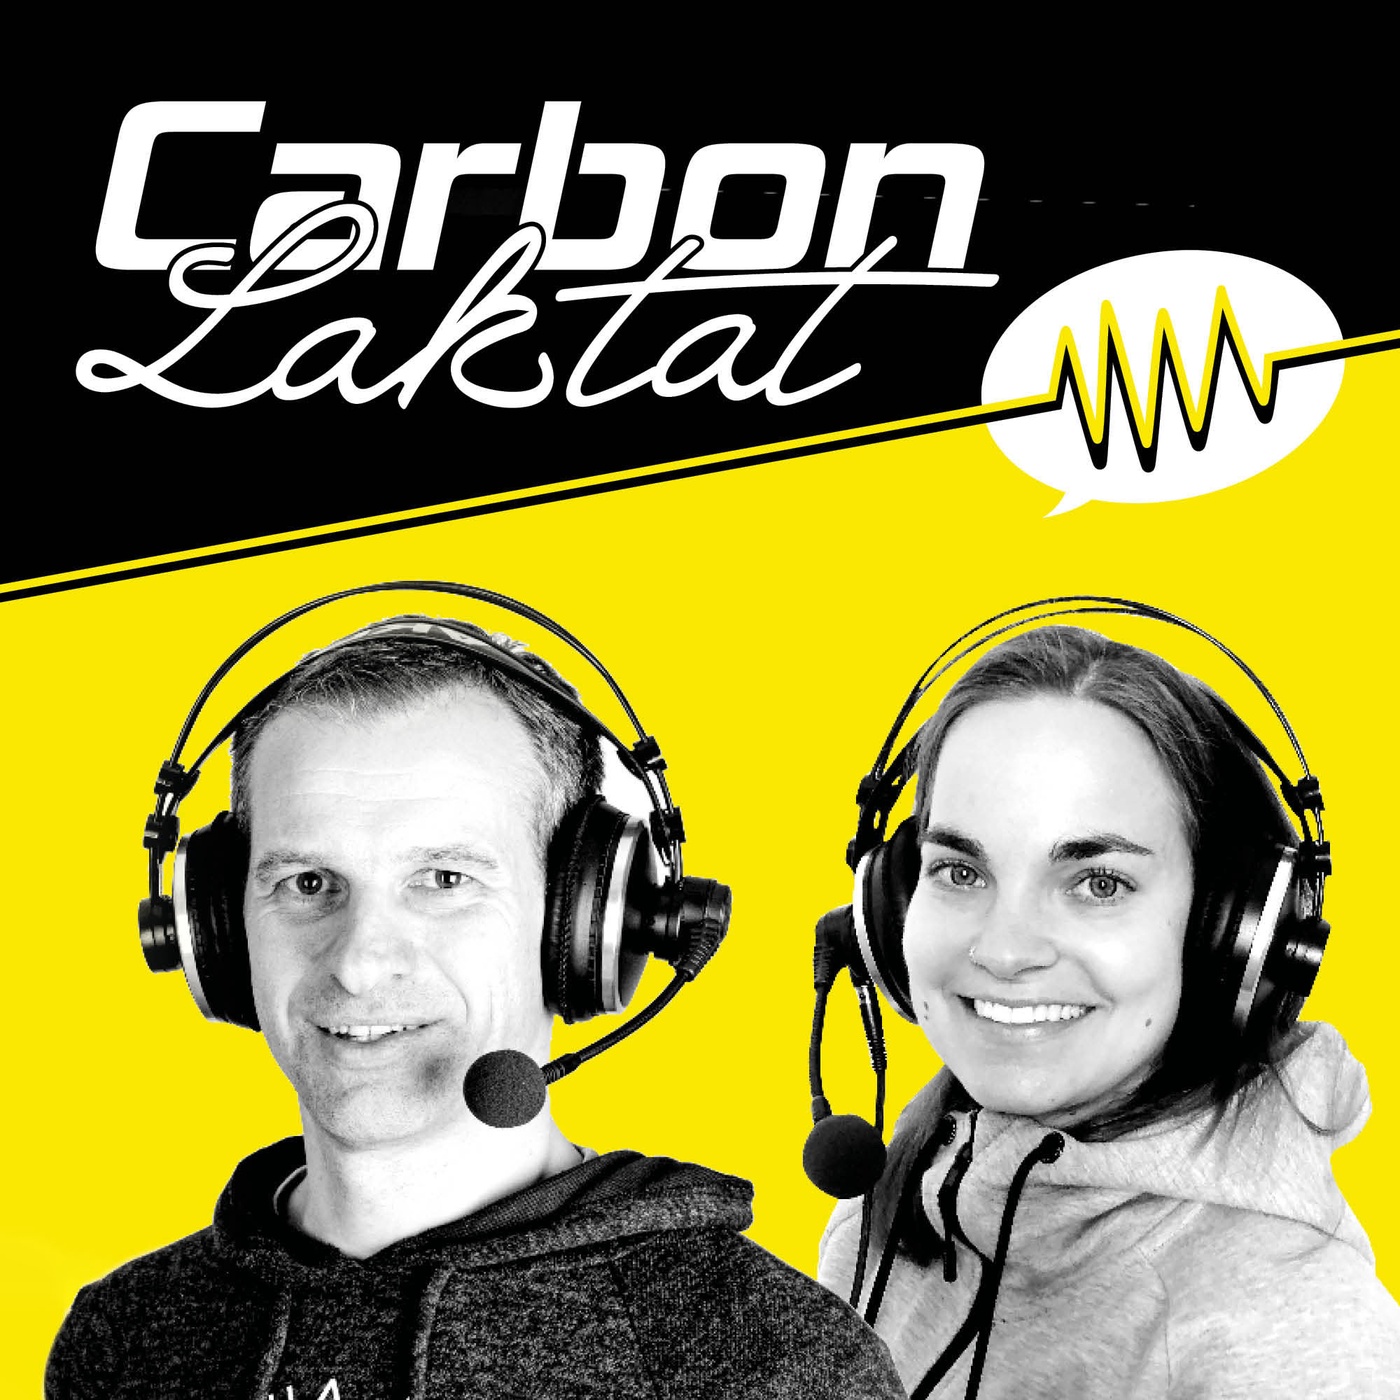 Carbon & Laktat: Triathlon abseits des Mainstream